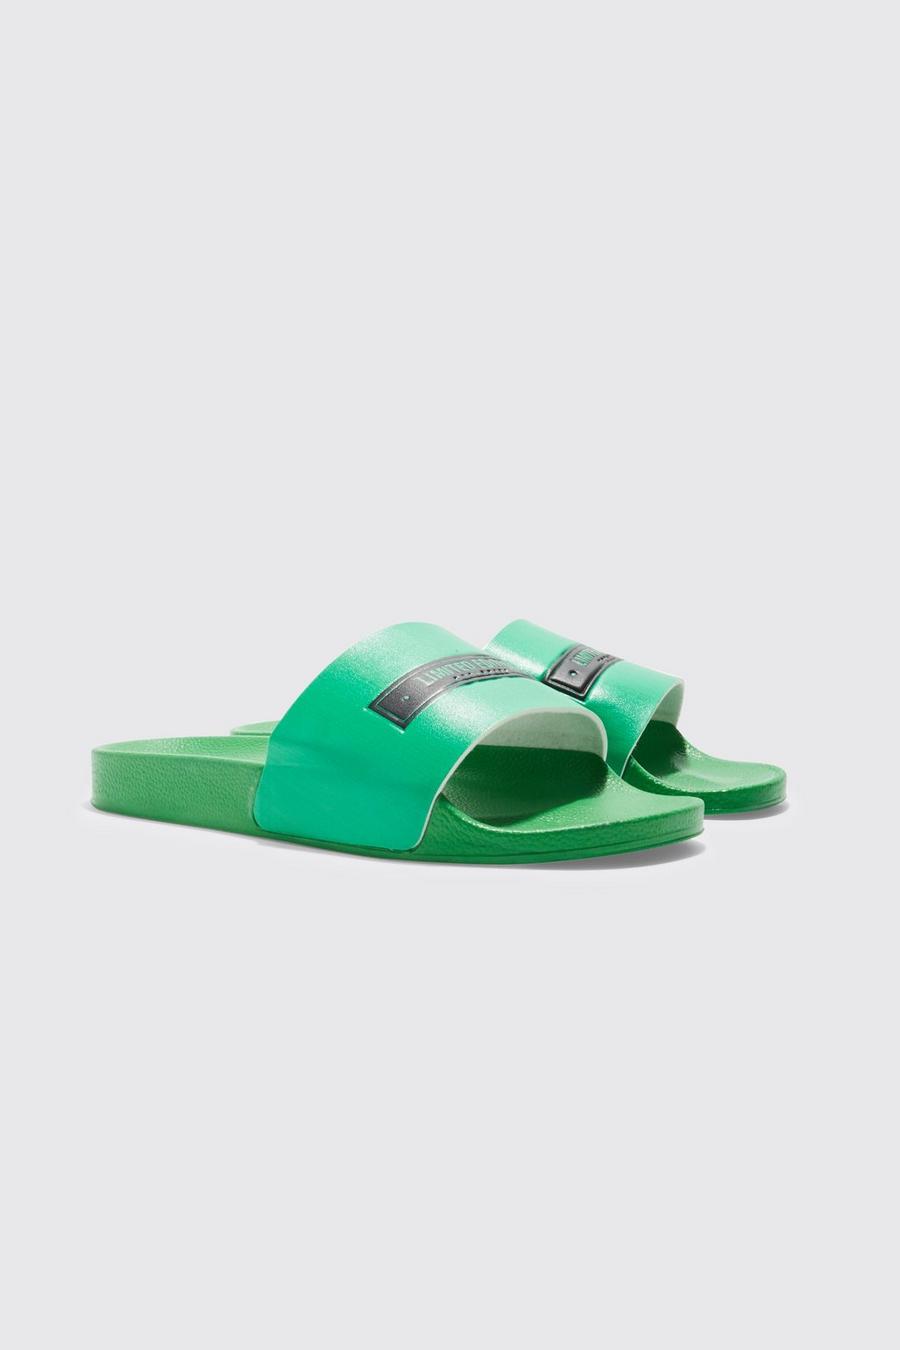 Sandalias con etiqueta Limited Edition, Green verde